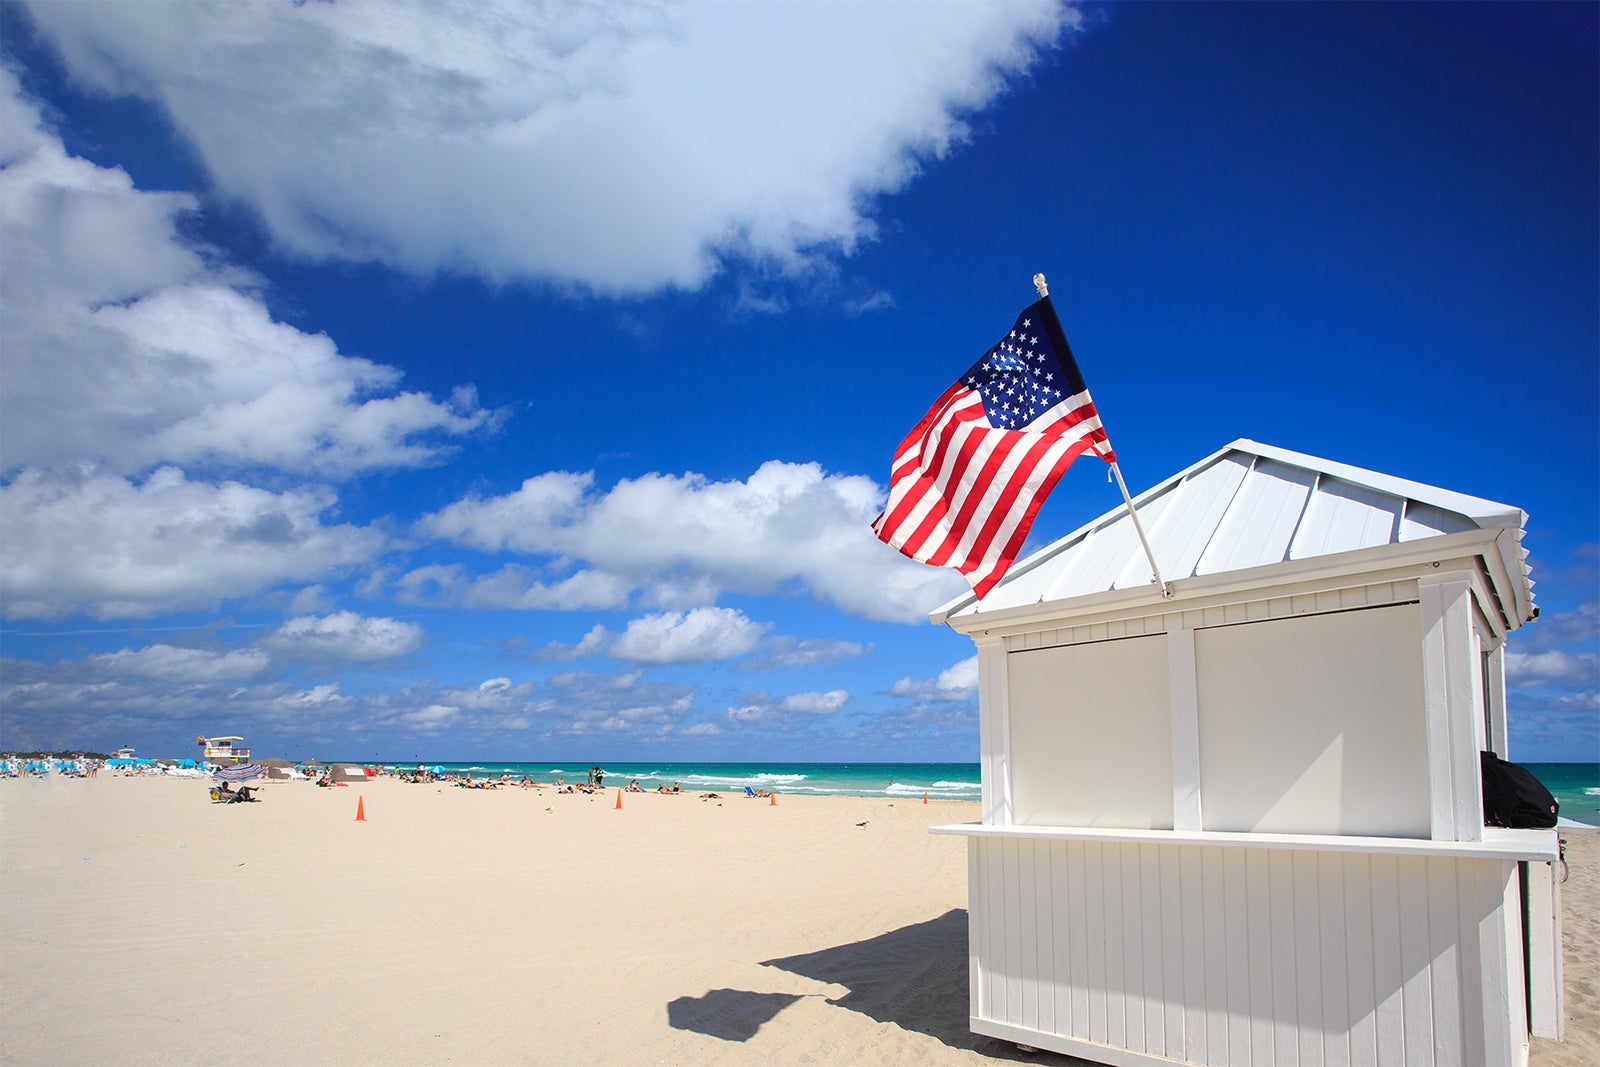 American flag on a lifeguard post at Miami Beach, FL